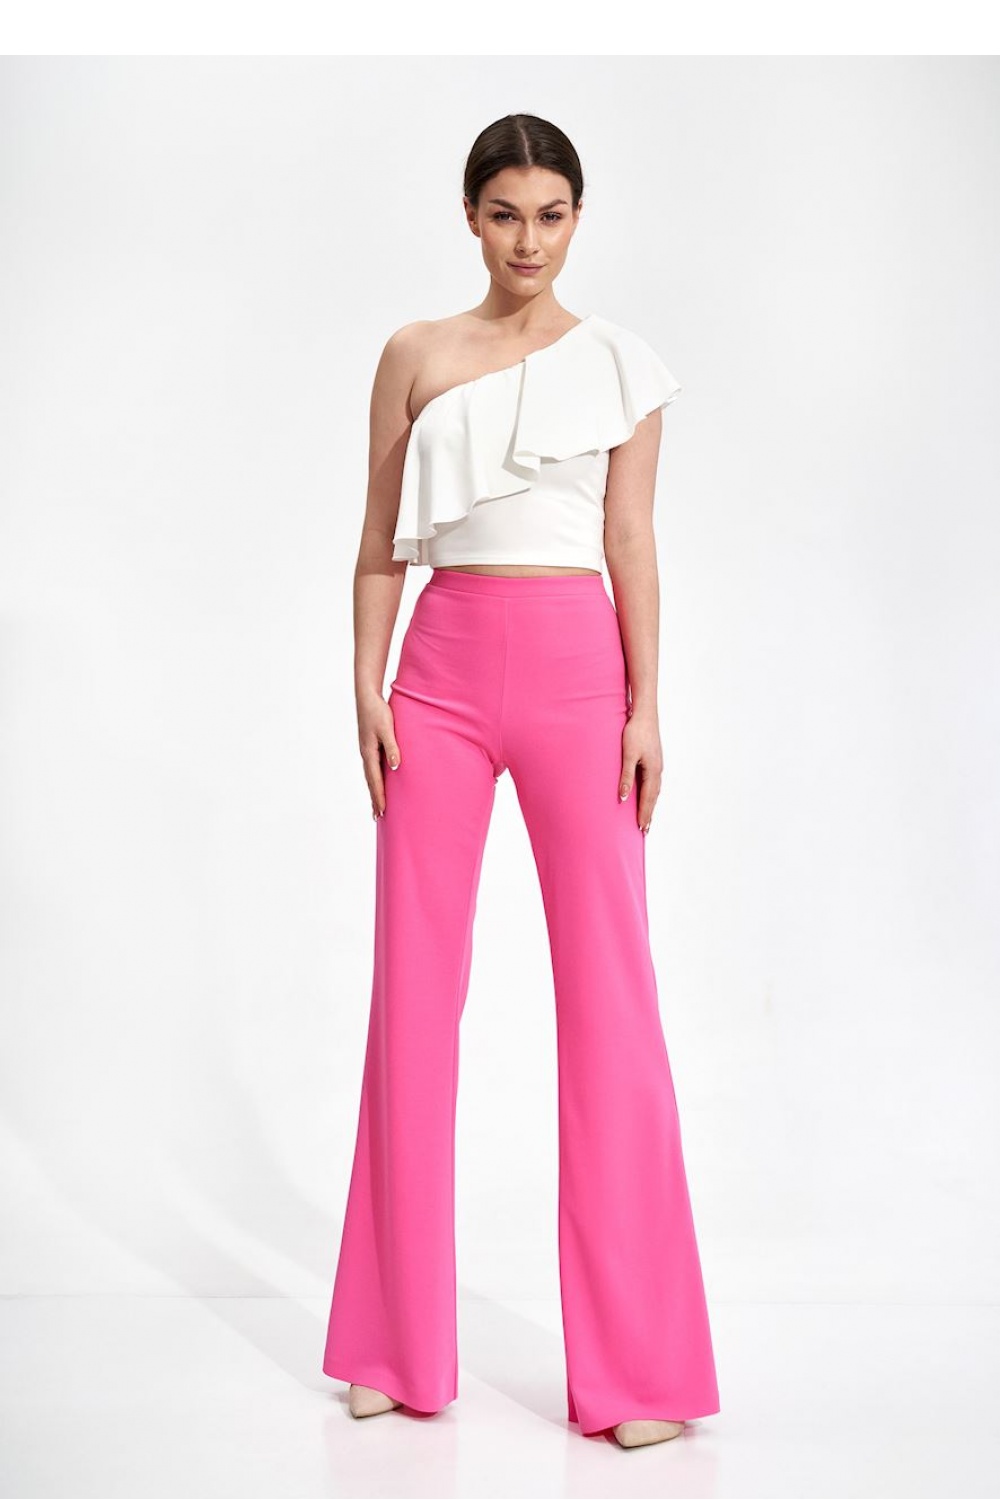 Women trousers model 167808 Figl pink Ladies